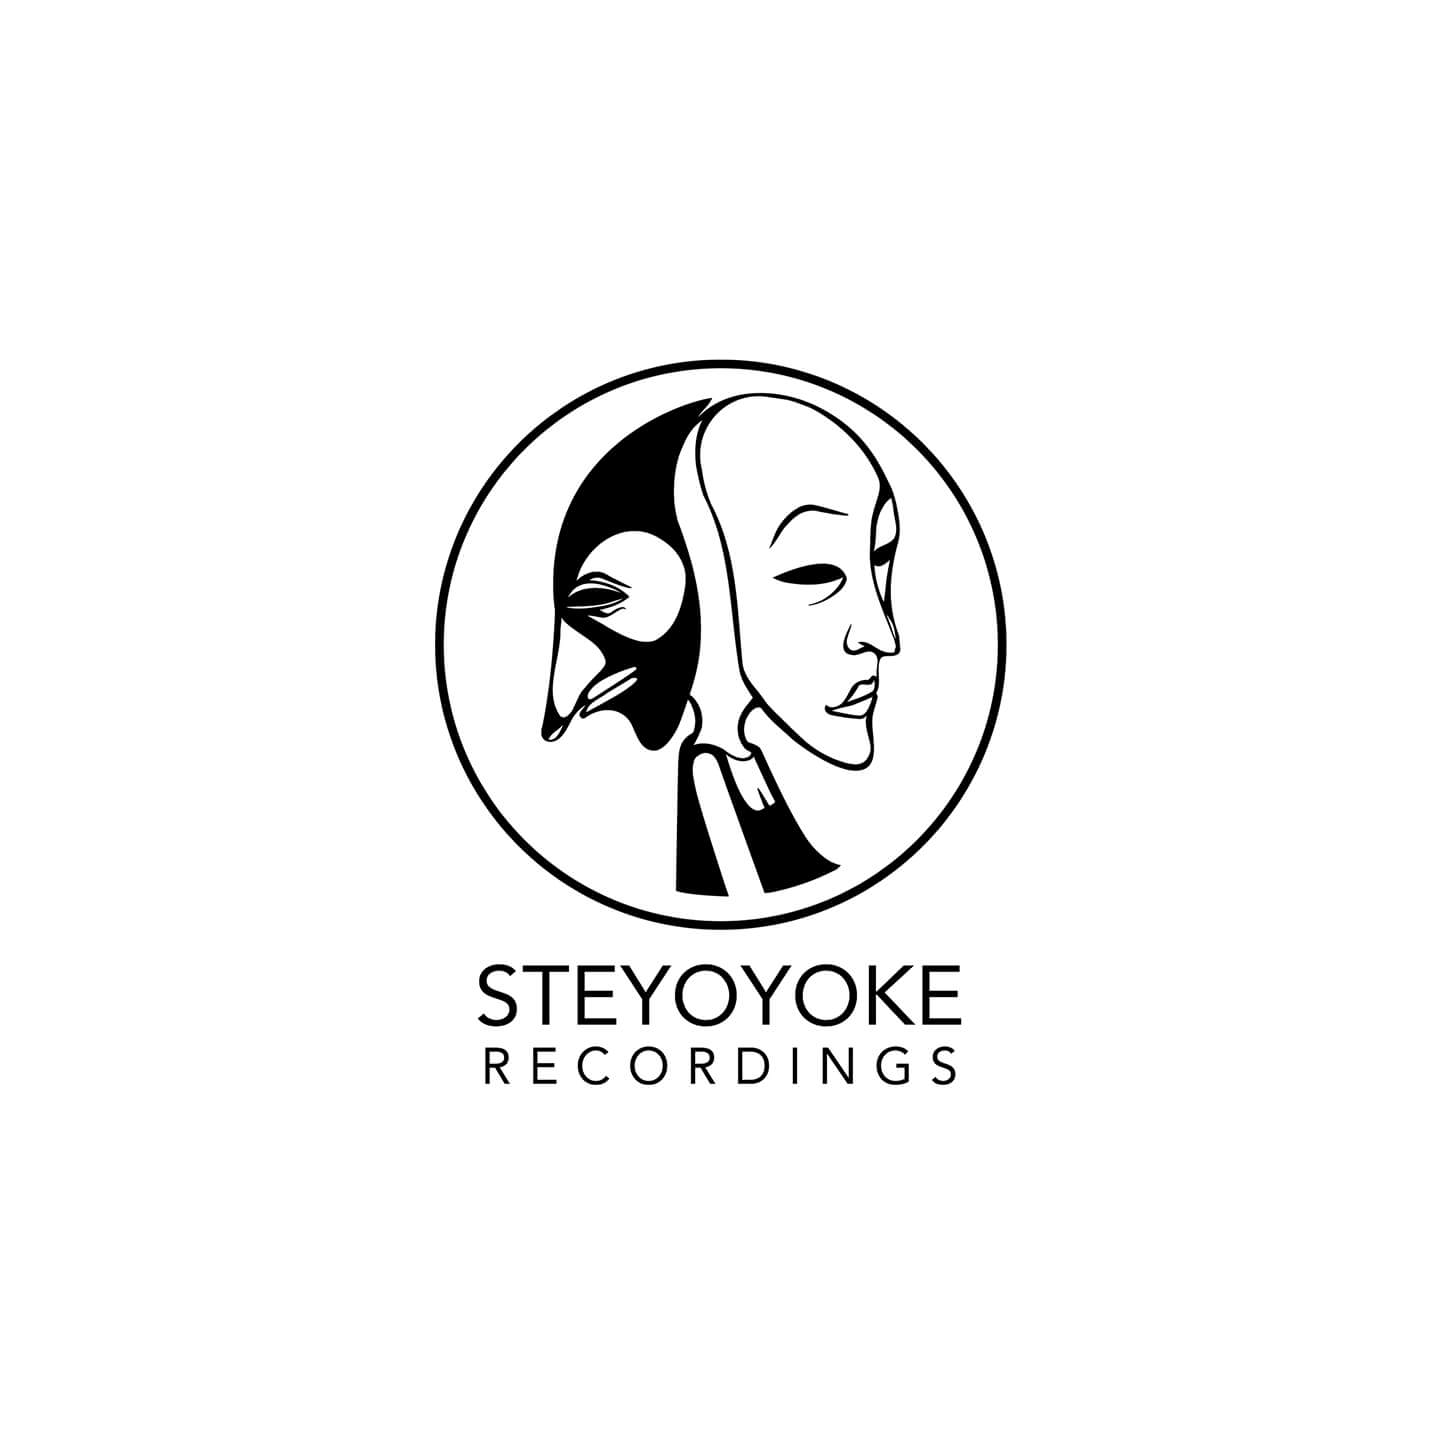 (c) Steyoyoke.com